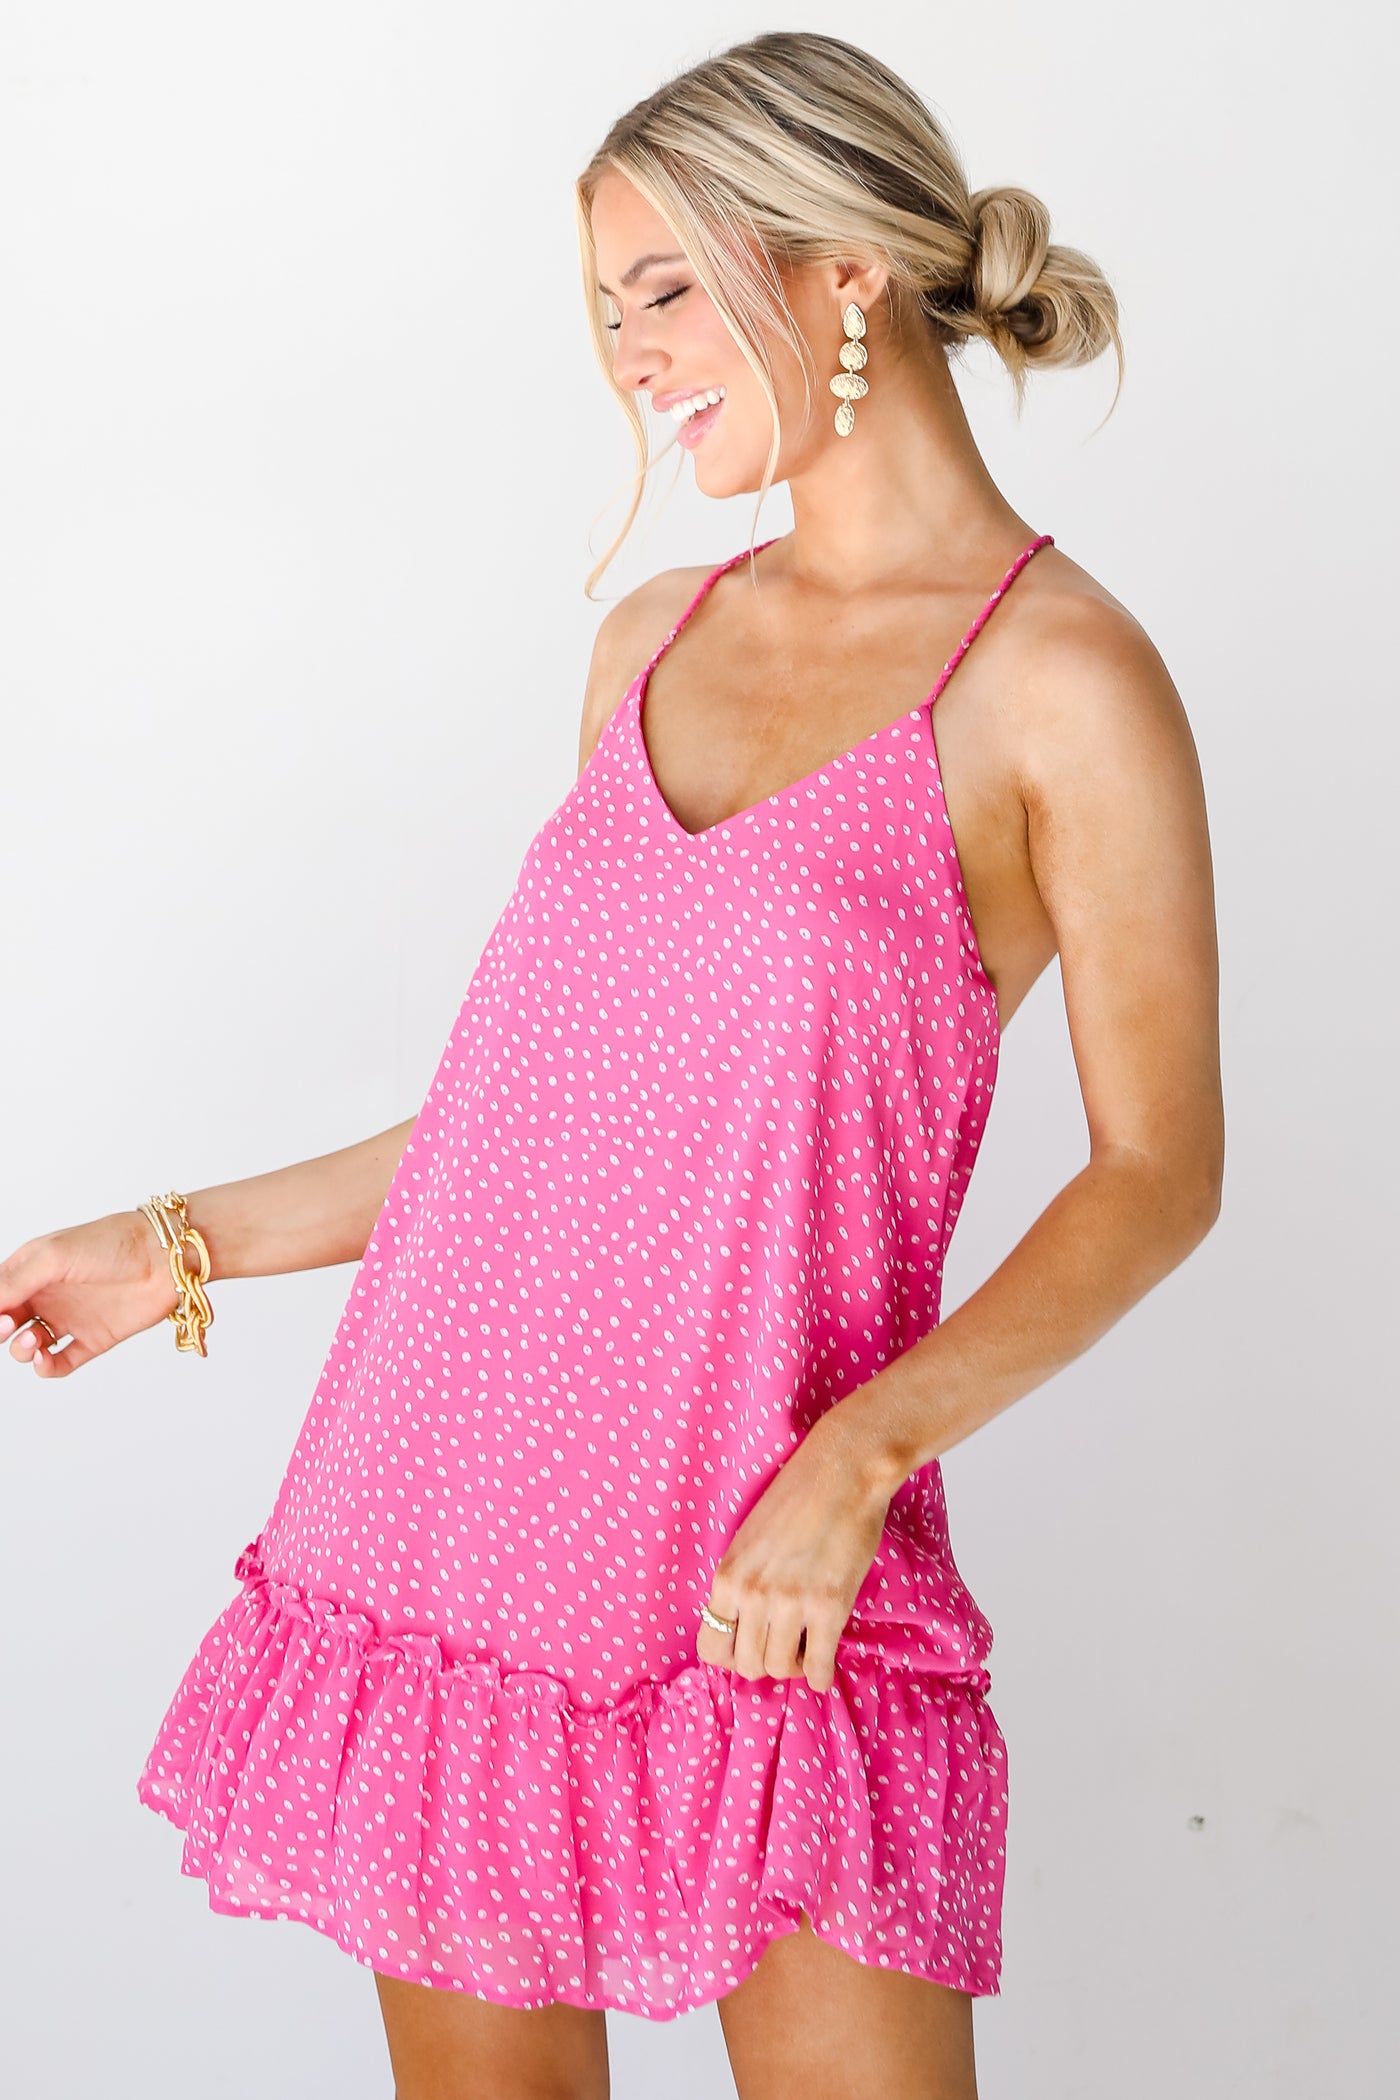 pink Spotted Mini Dress on dress up model